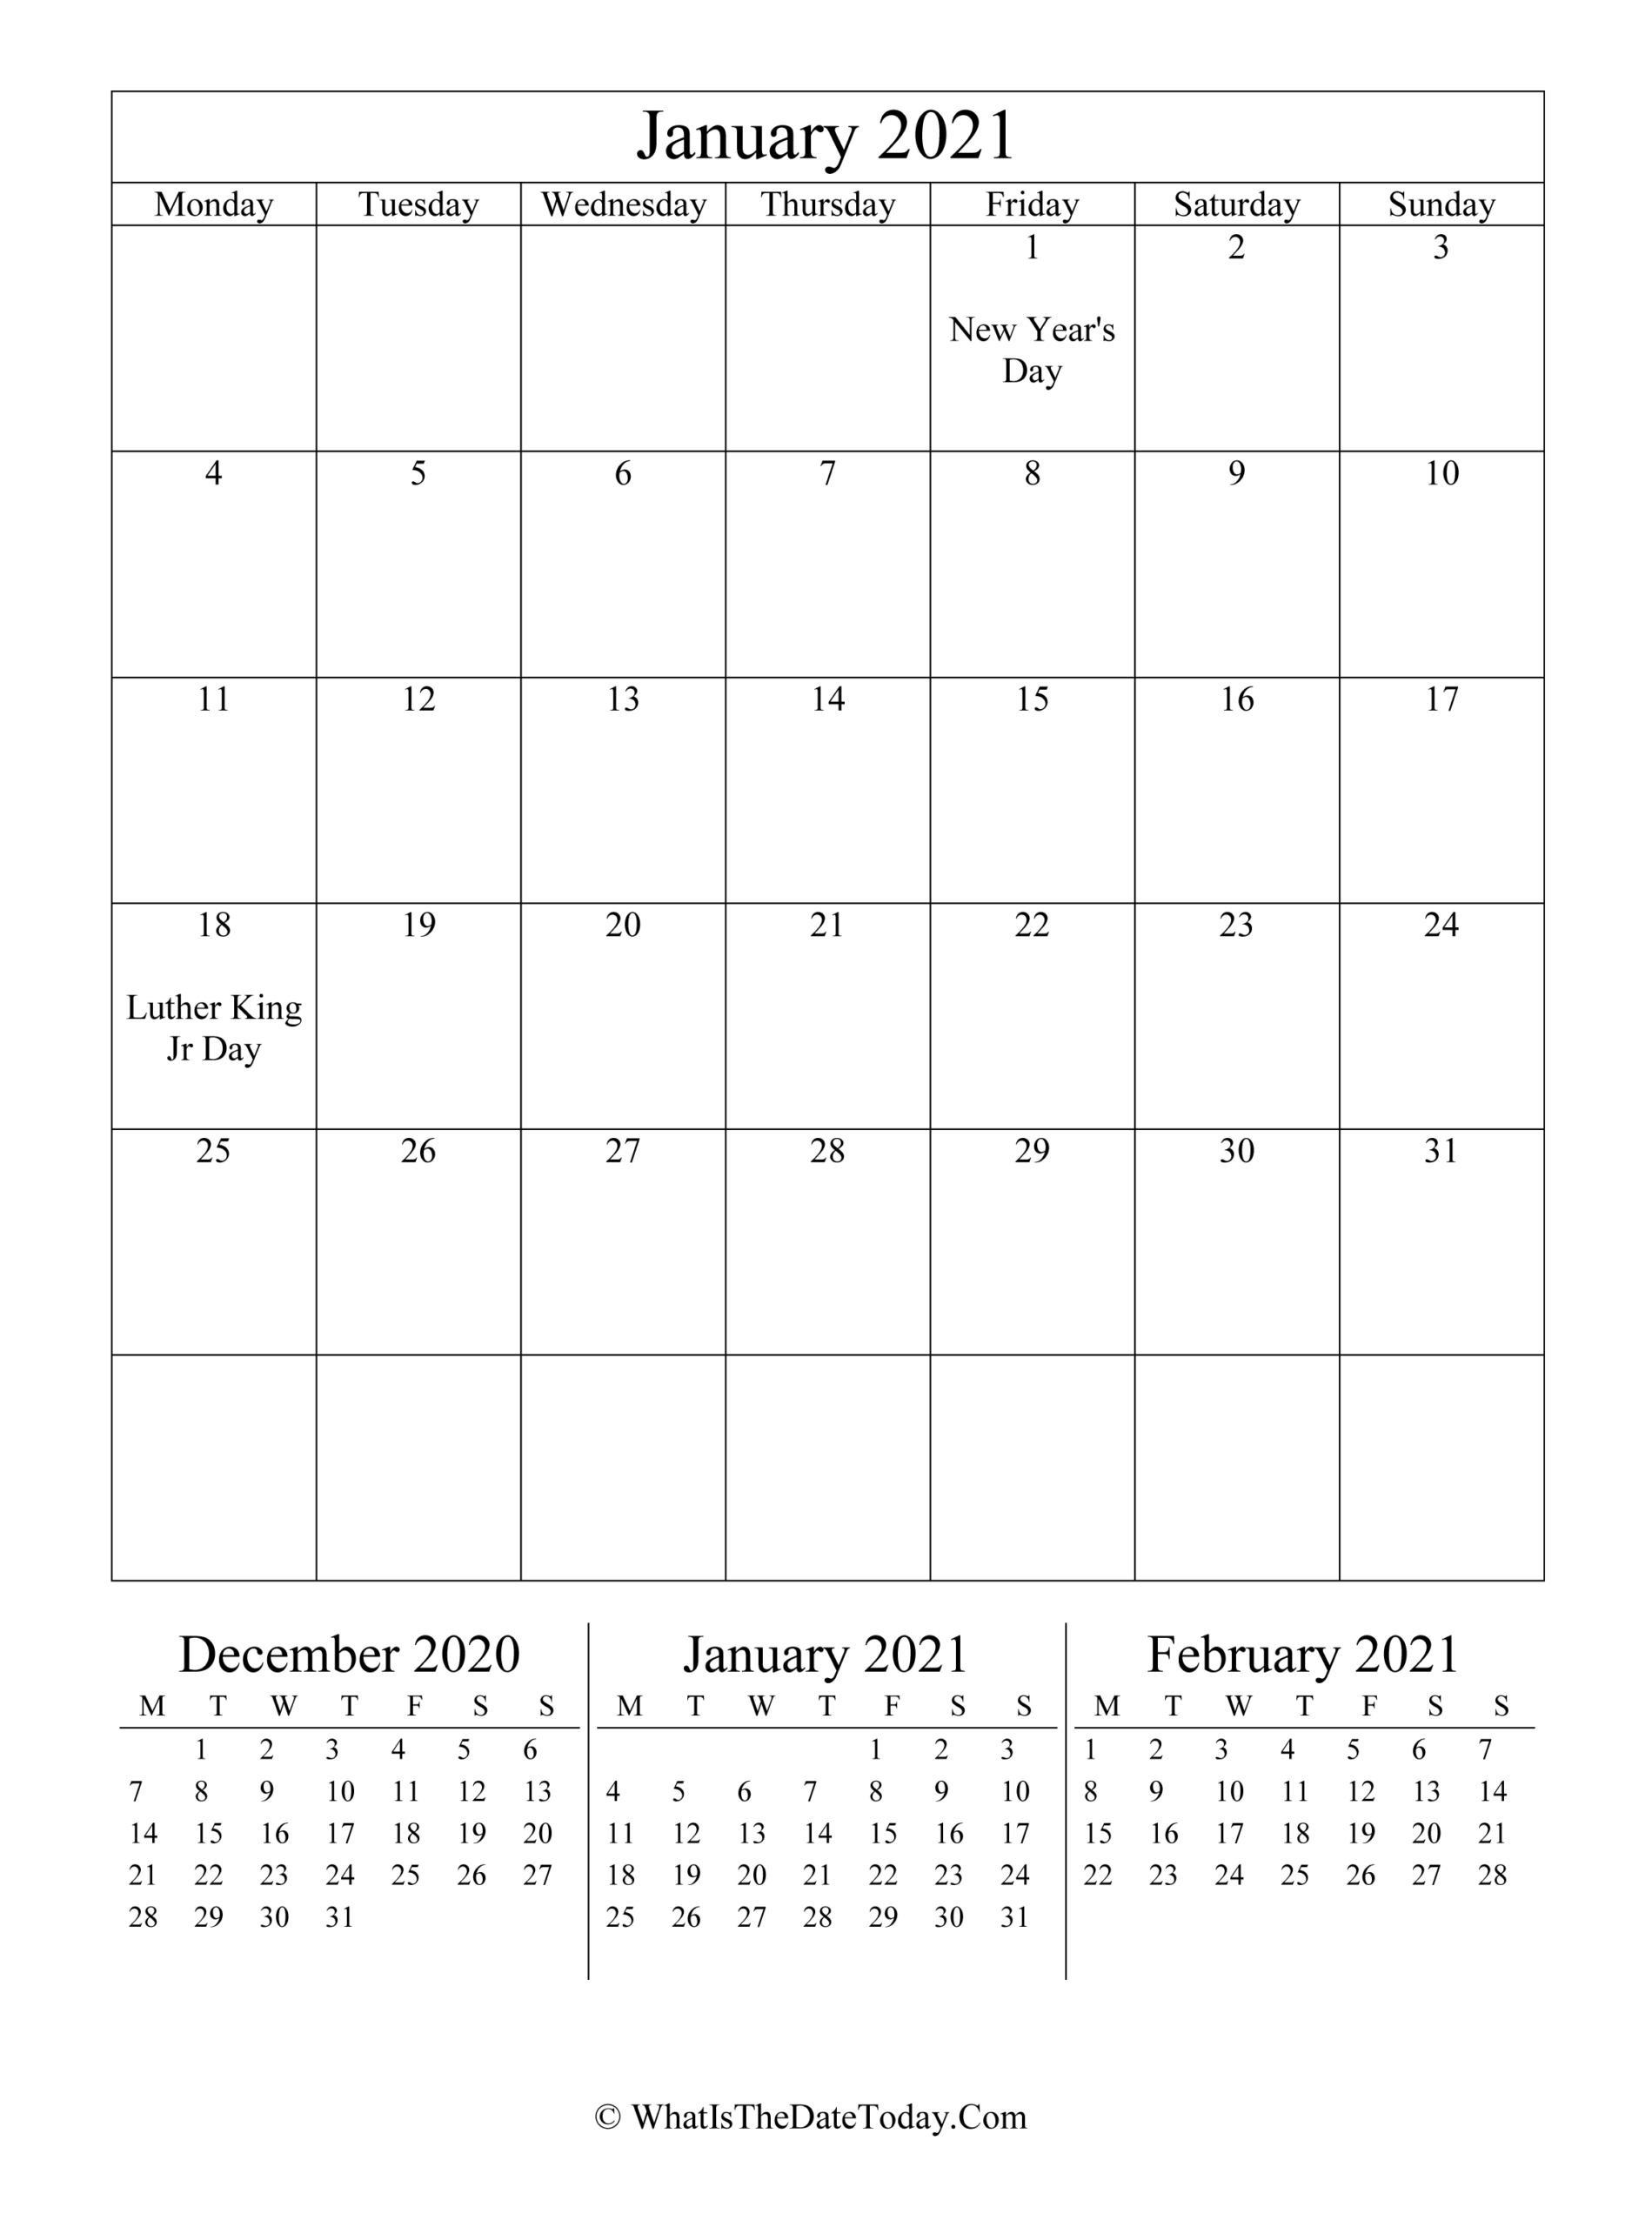 Get National Day Calendar January 2022